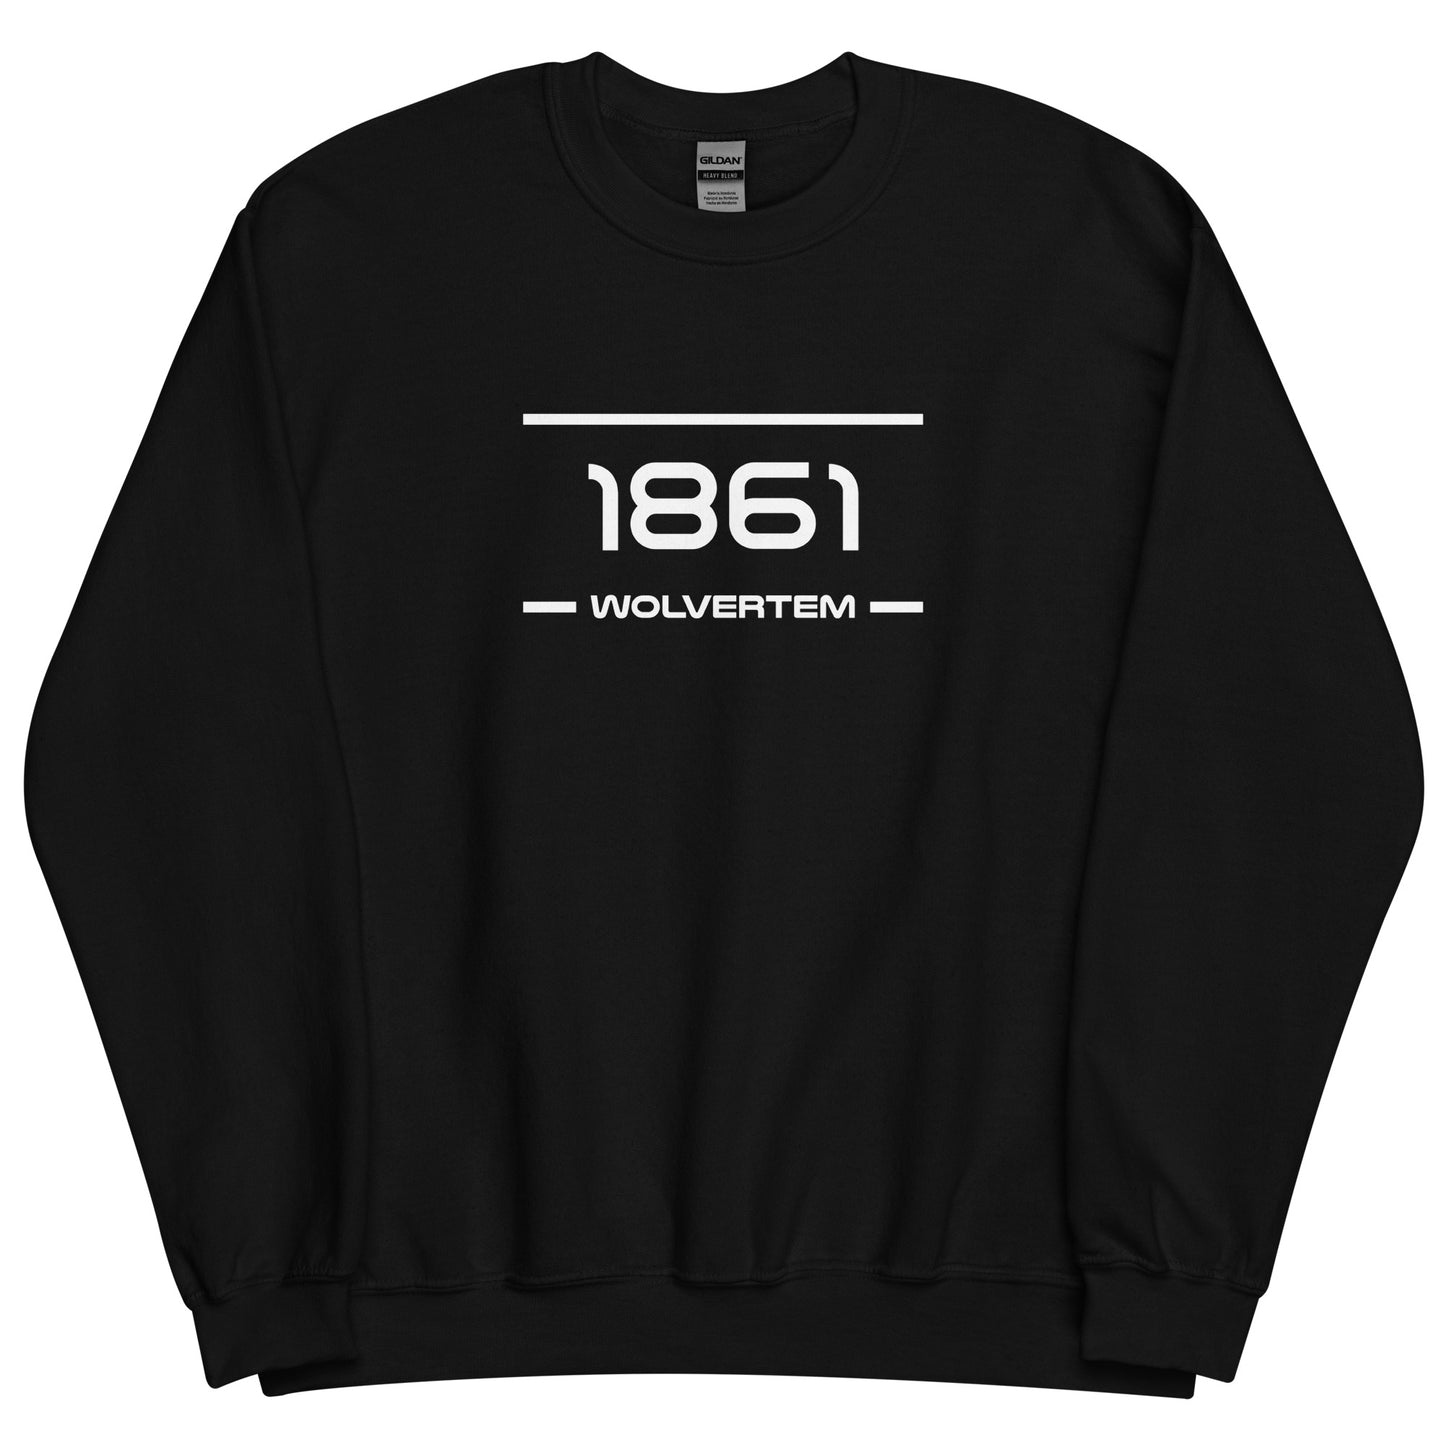 Sweater - 1861 - Wolvertem (M/V)